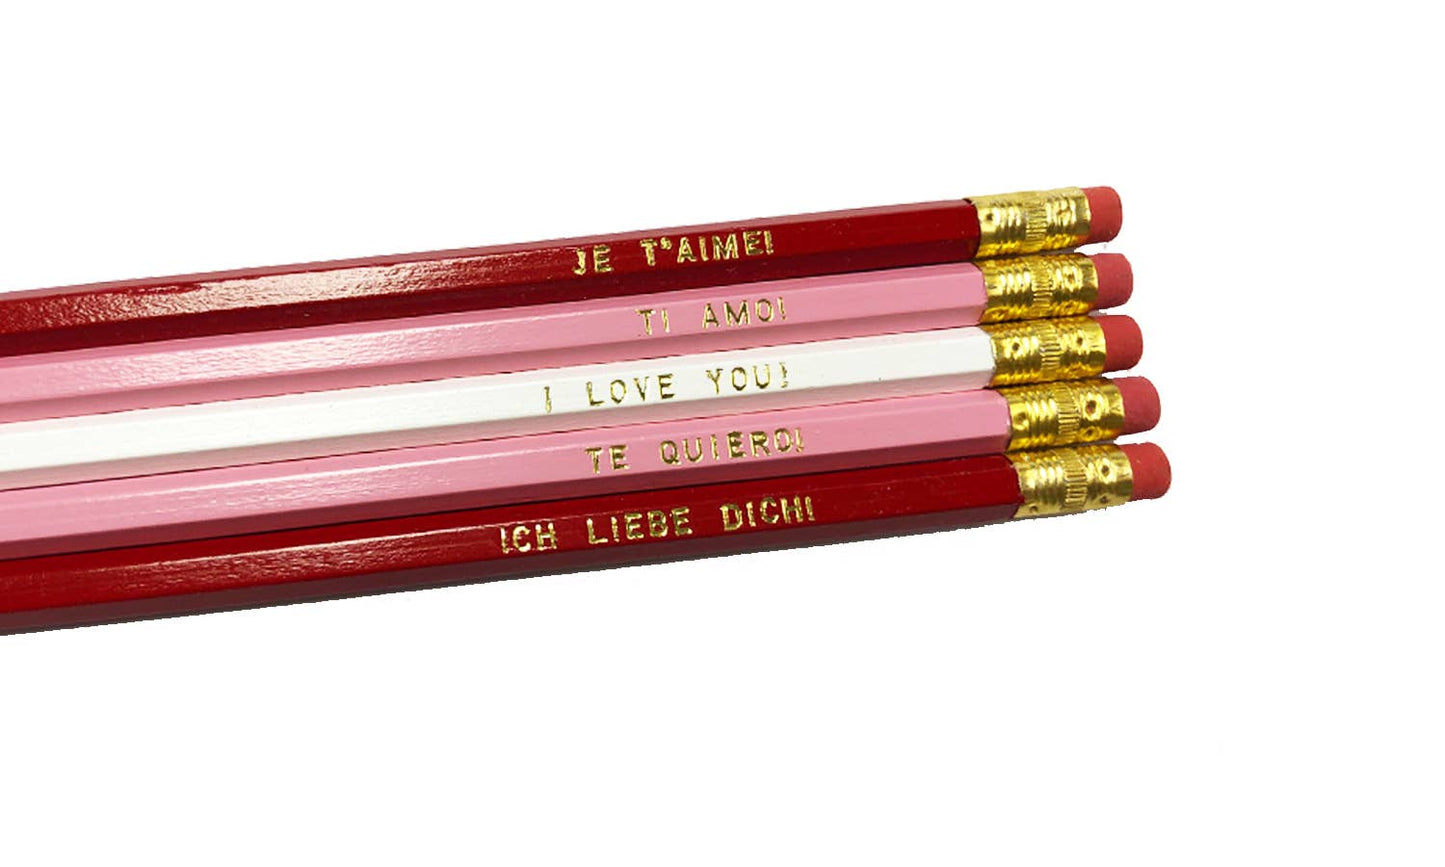 I LOVE YOU! Set of Pencils